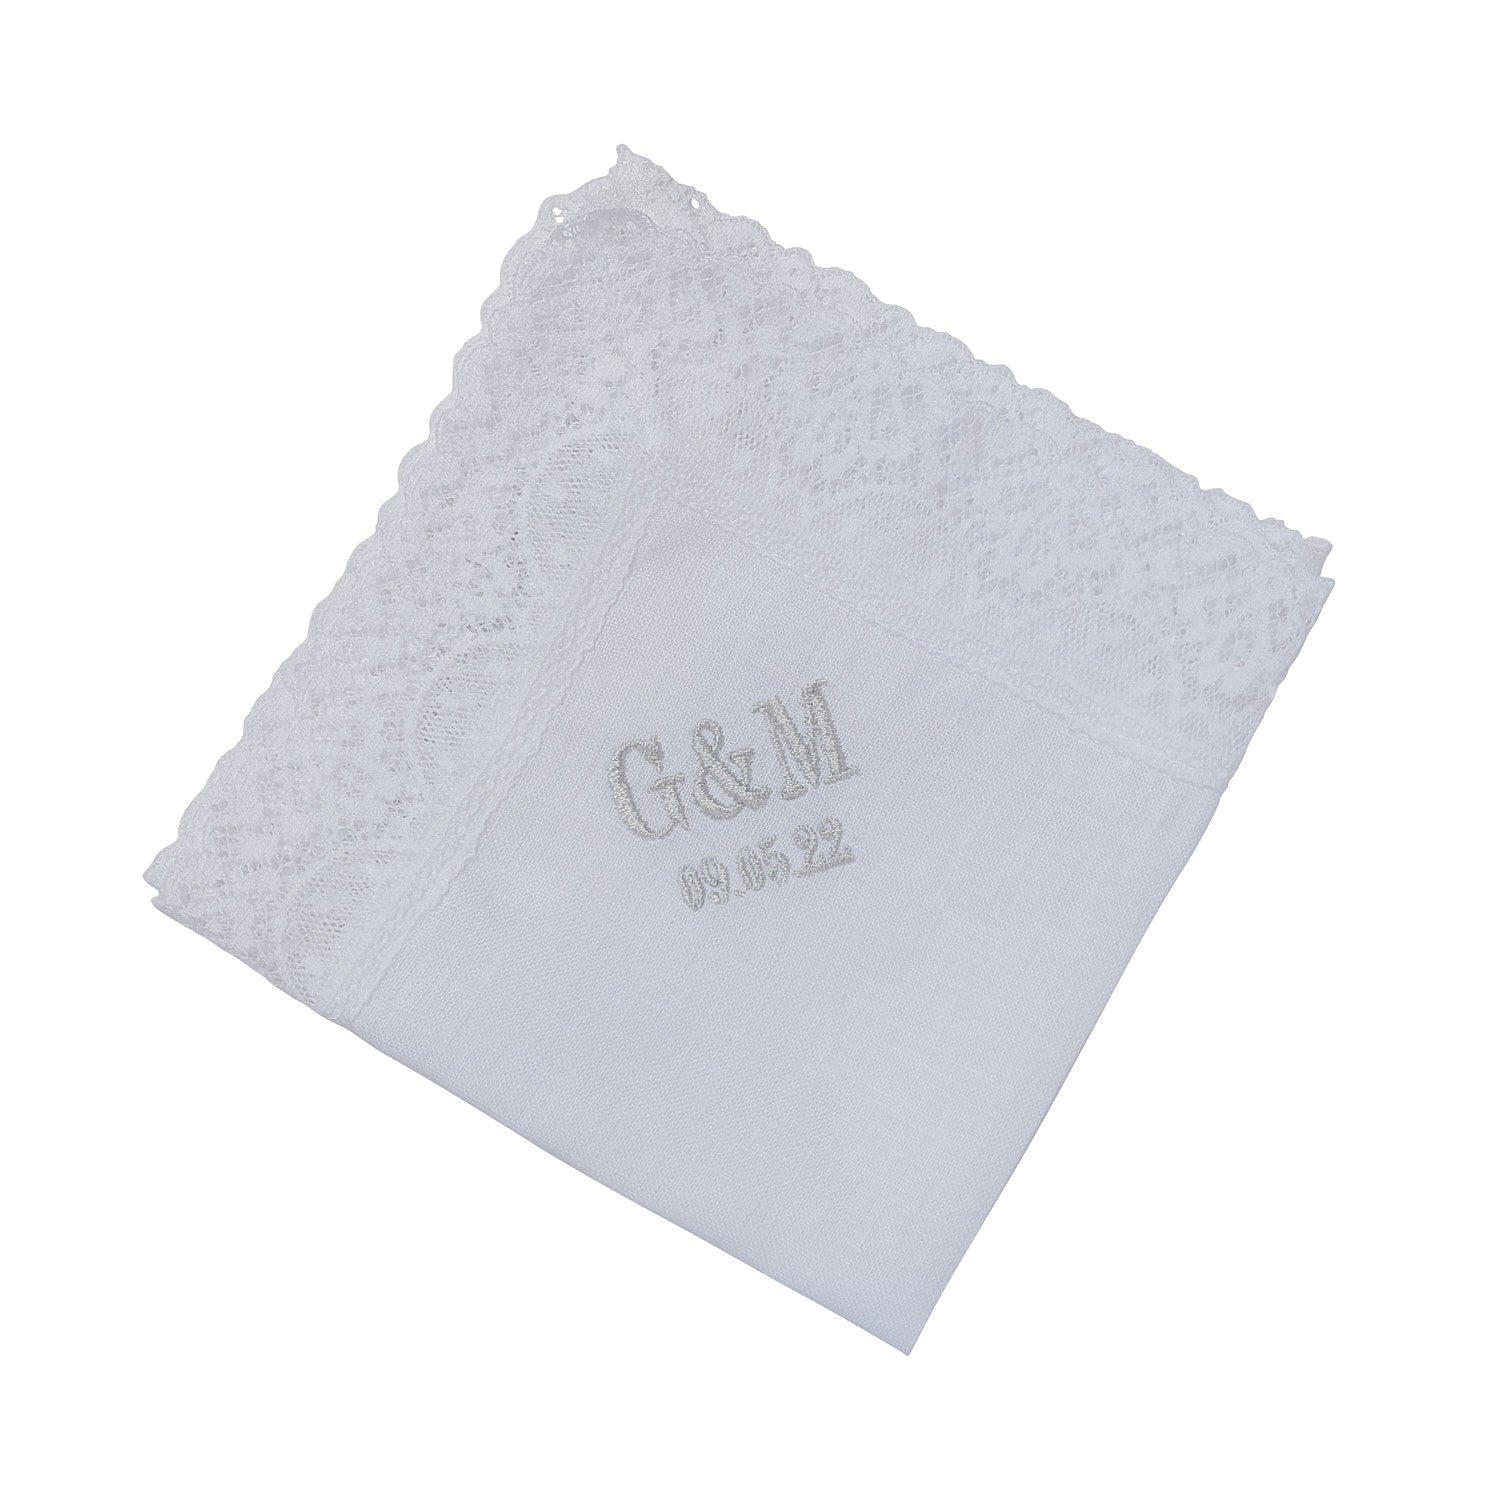 Personalised Women's Handkerchief